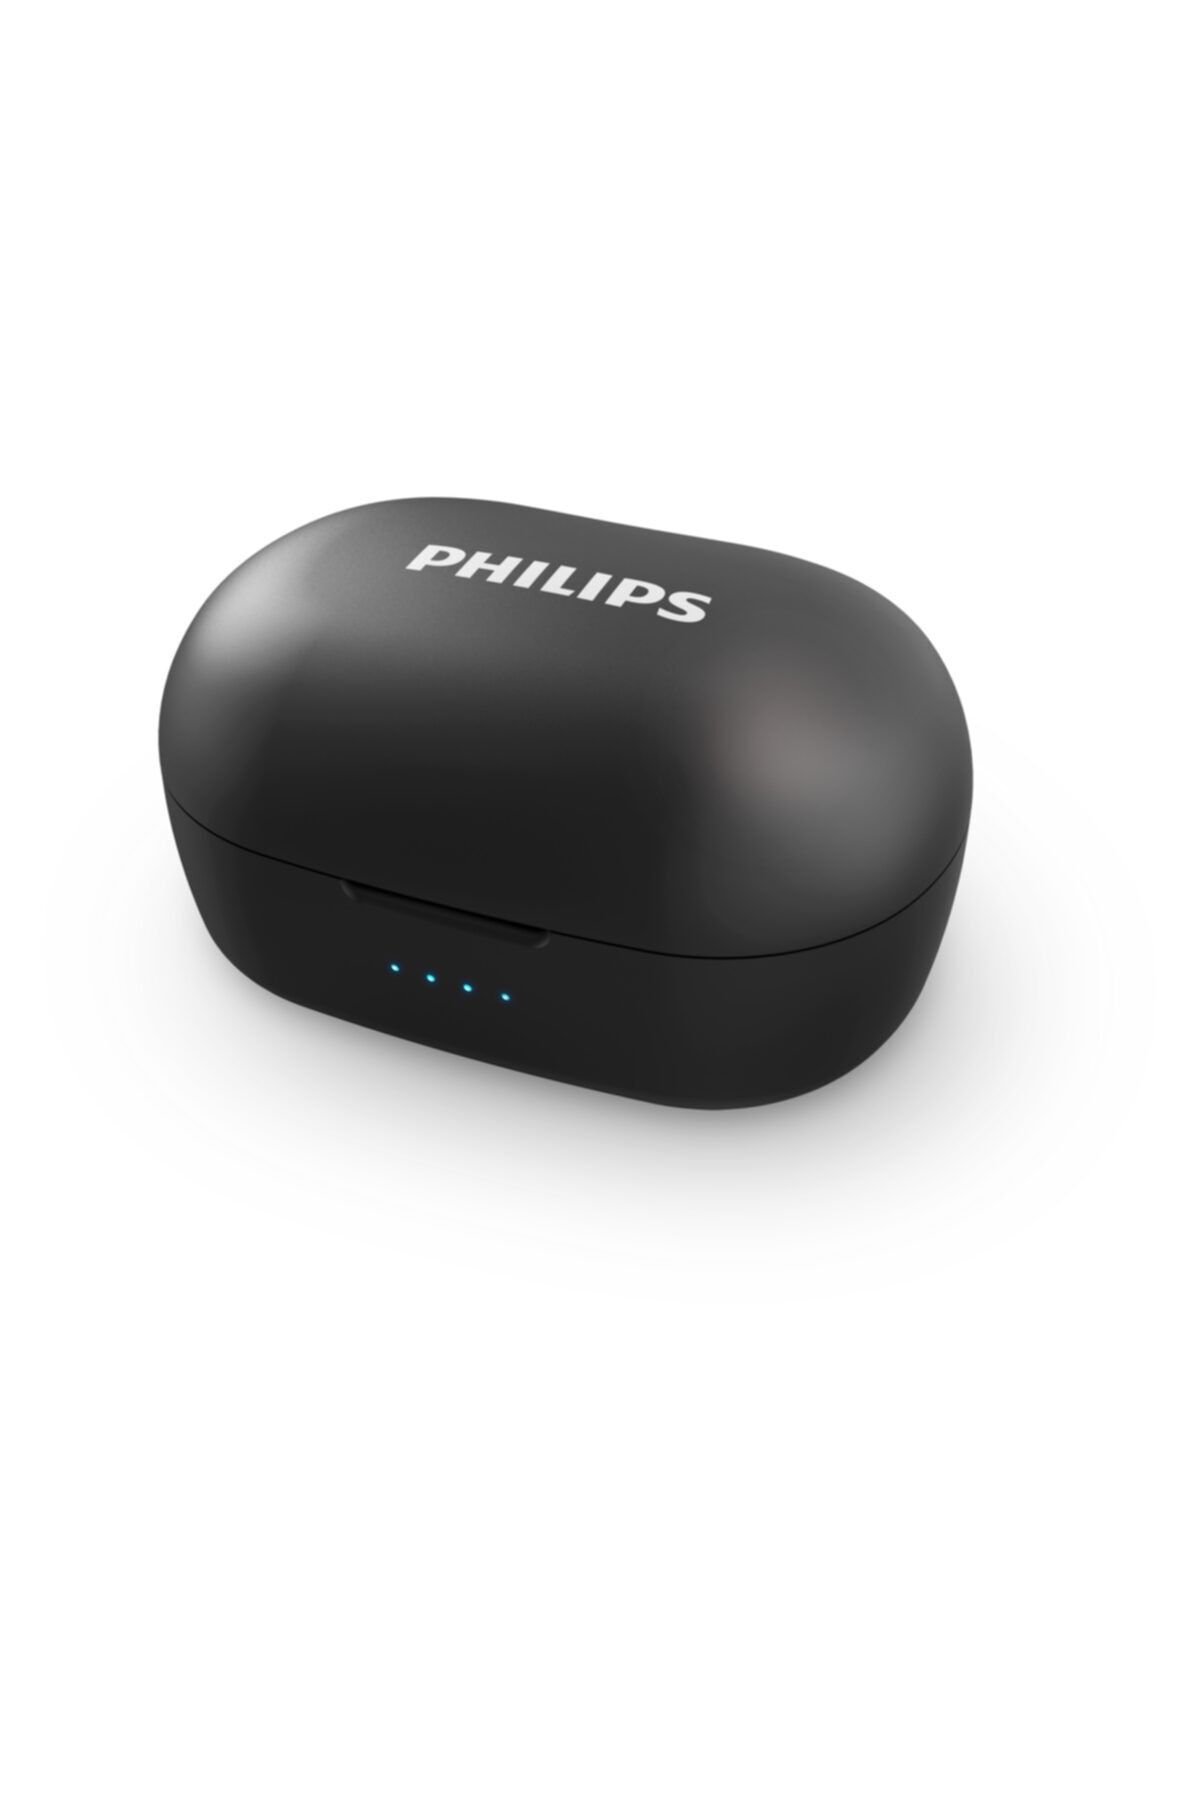 Наушники филипс тат. Чехол для наушников Philips tat2206. Наушники Philips Headphones 2000 Series. Philips tat2205. Наушники Philips беспроводные Bluetooth.